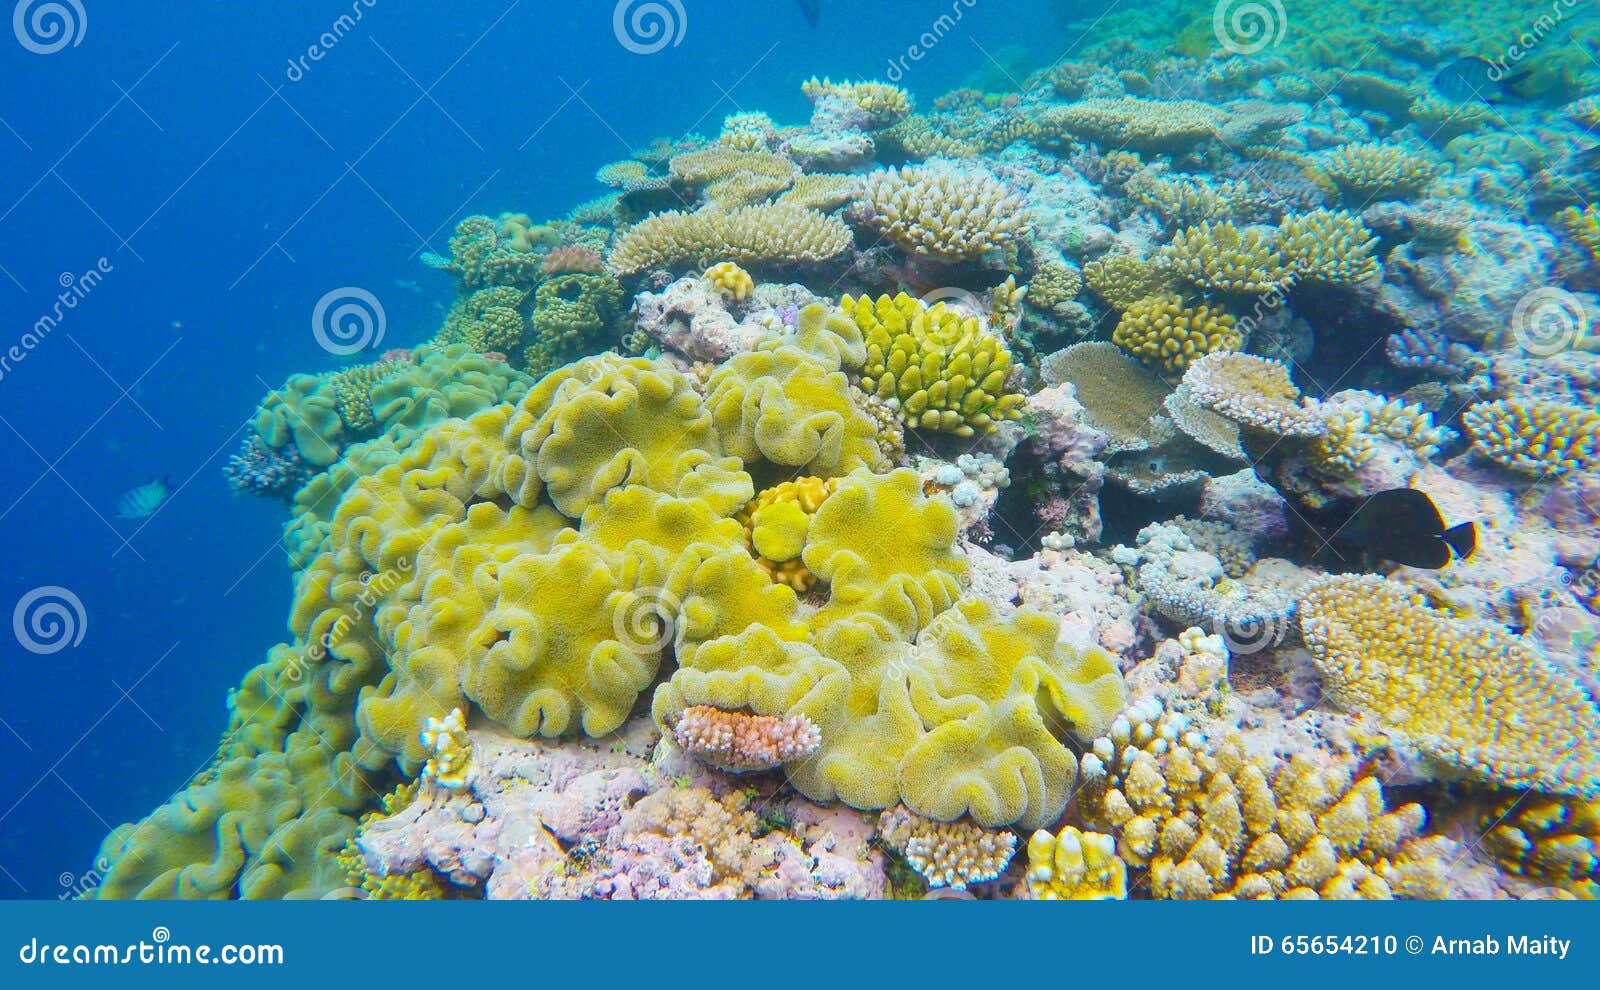 coral close up in agincourt reefs australia